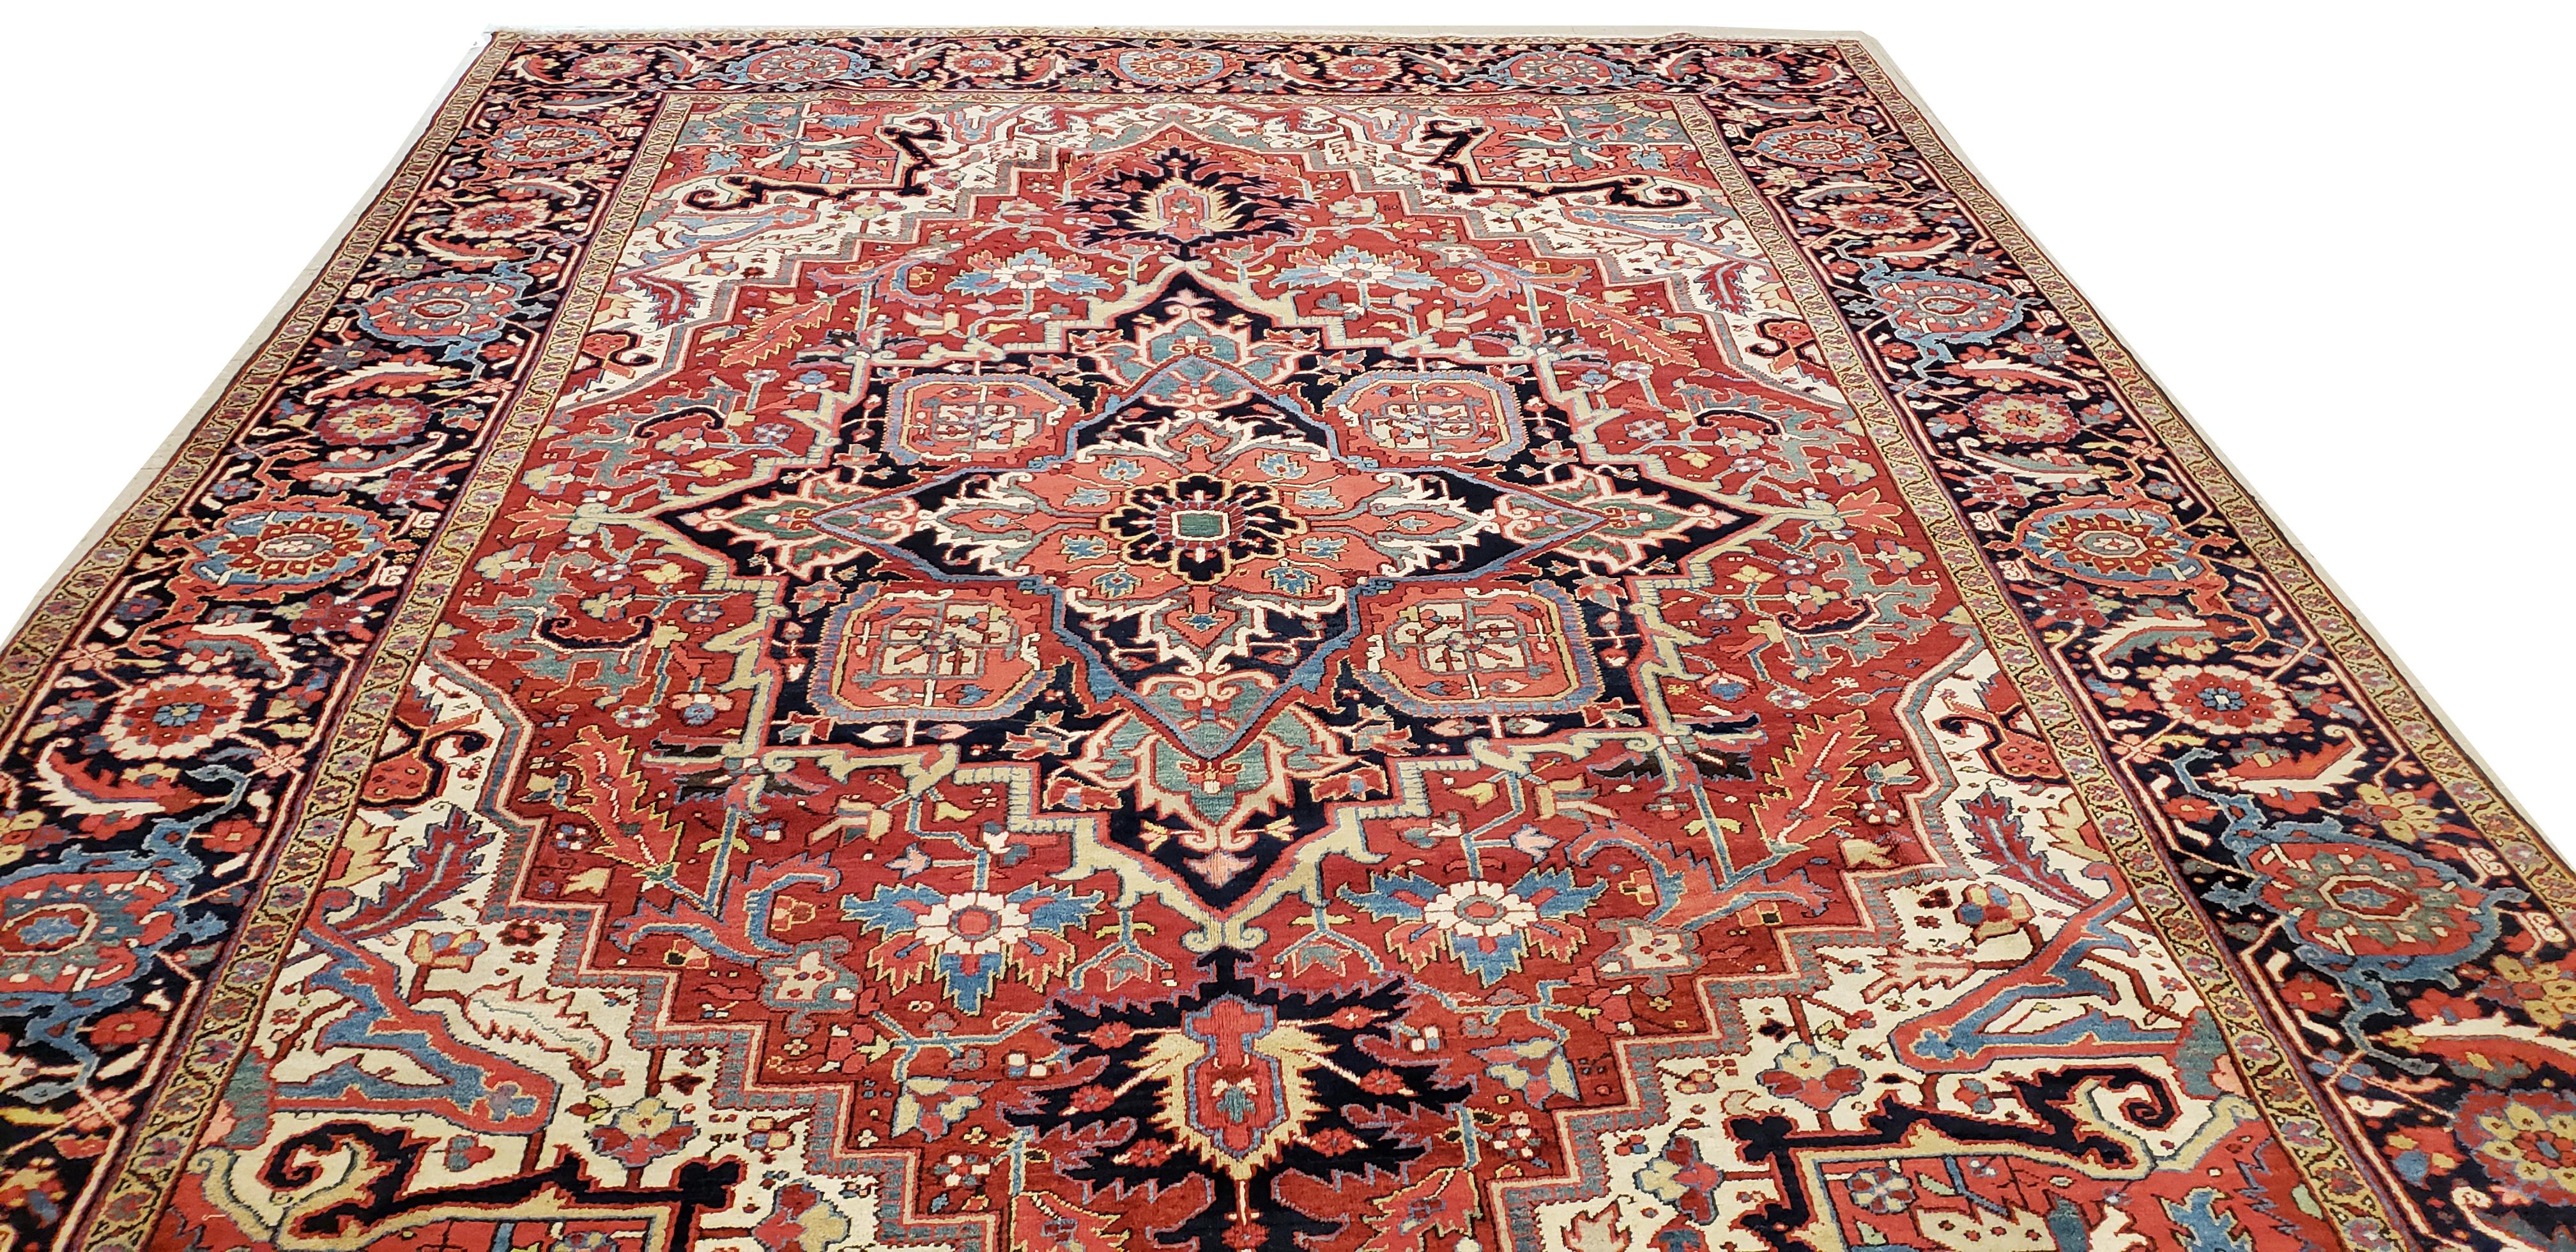 Hand-Knotted Antique Persian Heriz Carpet, Handmade Wool Oriental Rug, Rust, Navy, Lt Blue